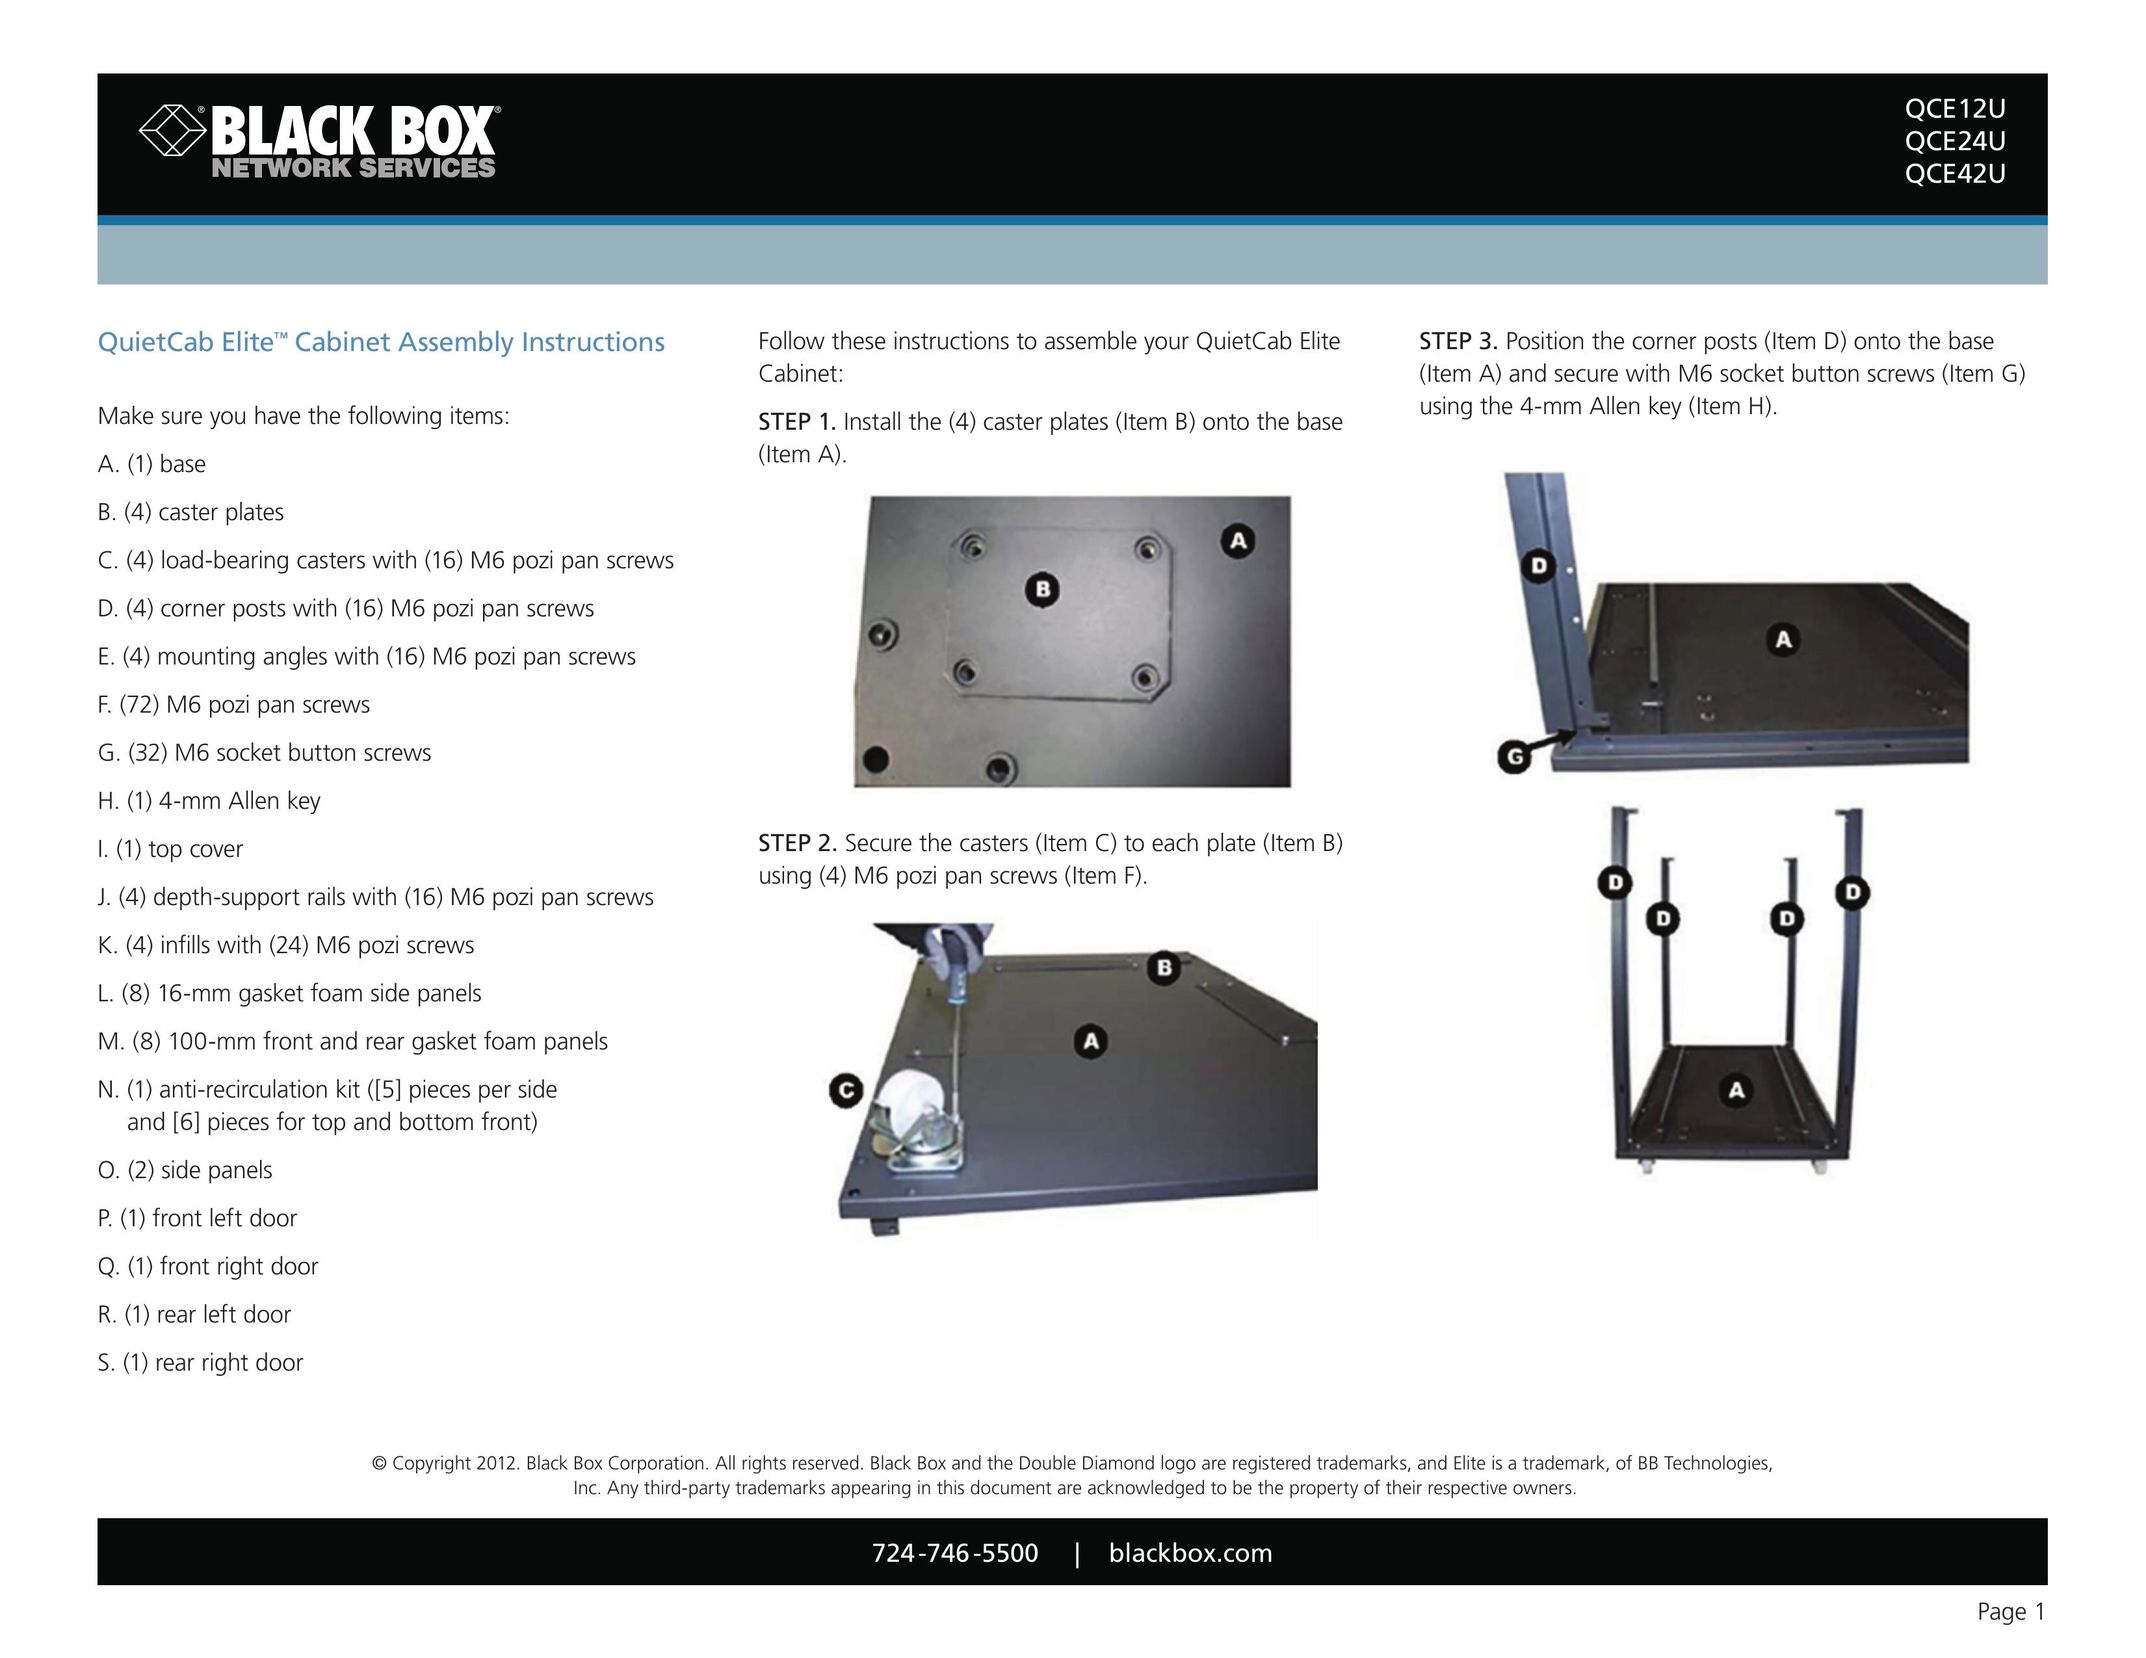 Black Box QCE42U Cable Box User Manual